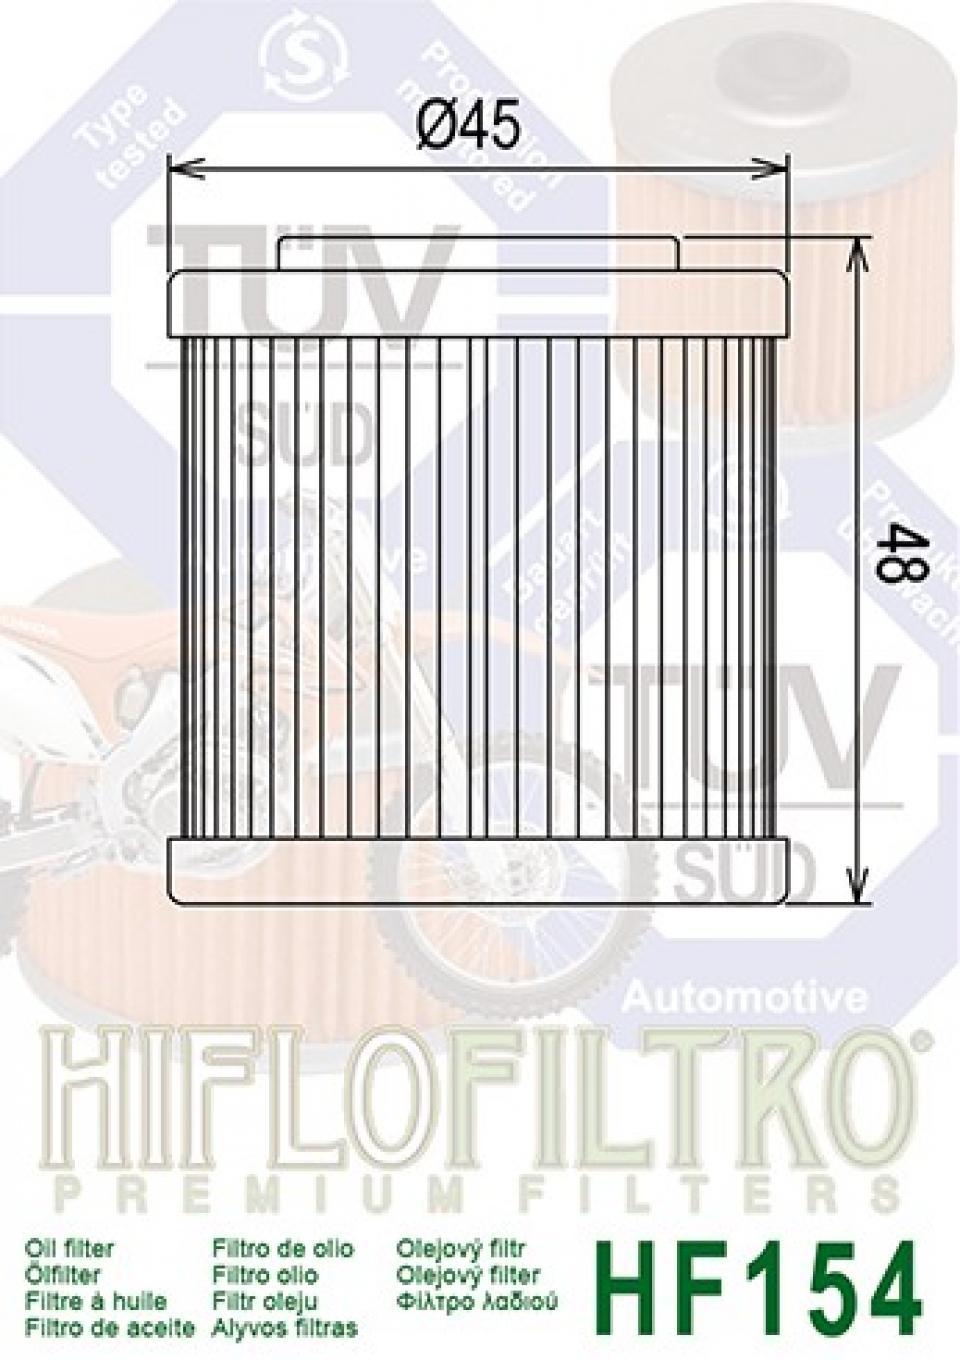 Filtre à huile Hiflo Filtro pour Moto Husqvarna 250 Tc 4T 2002-2007 Neuf